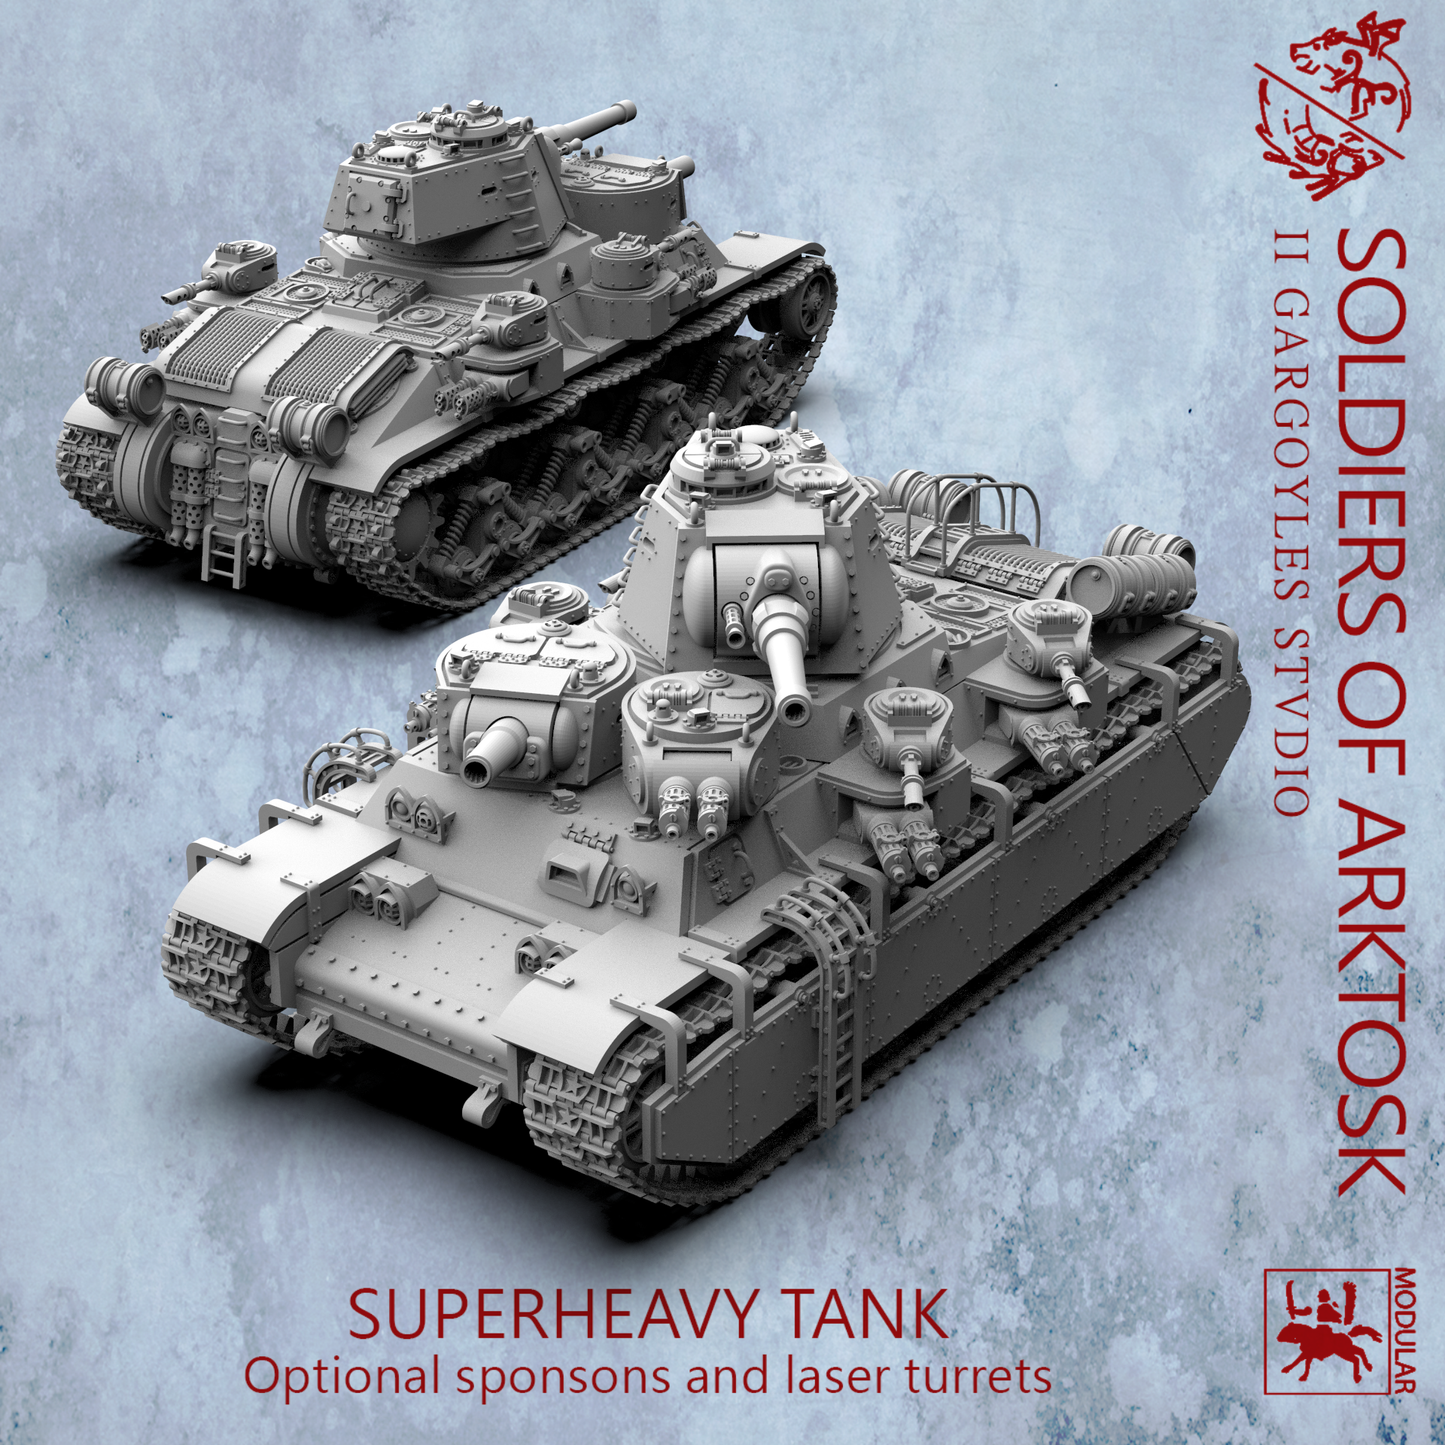 Super Heavy Tank - Soldiers of Arktosk